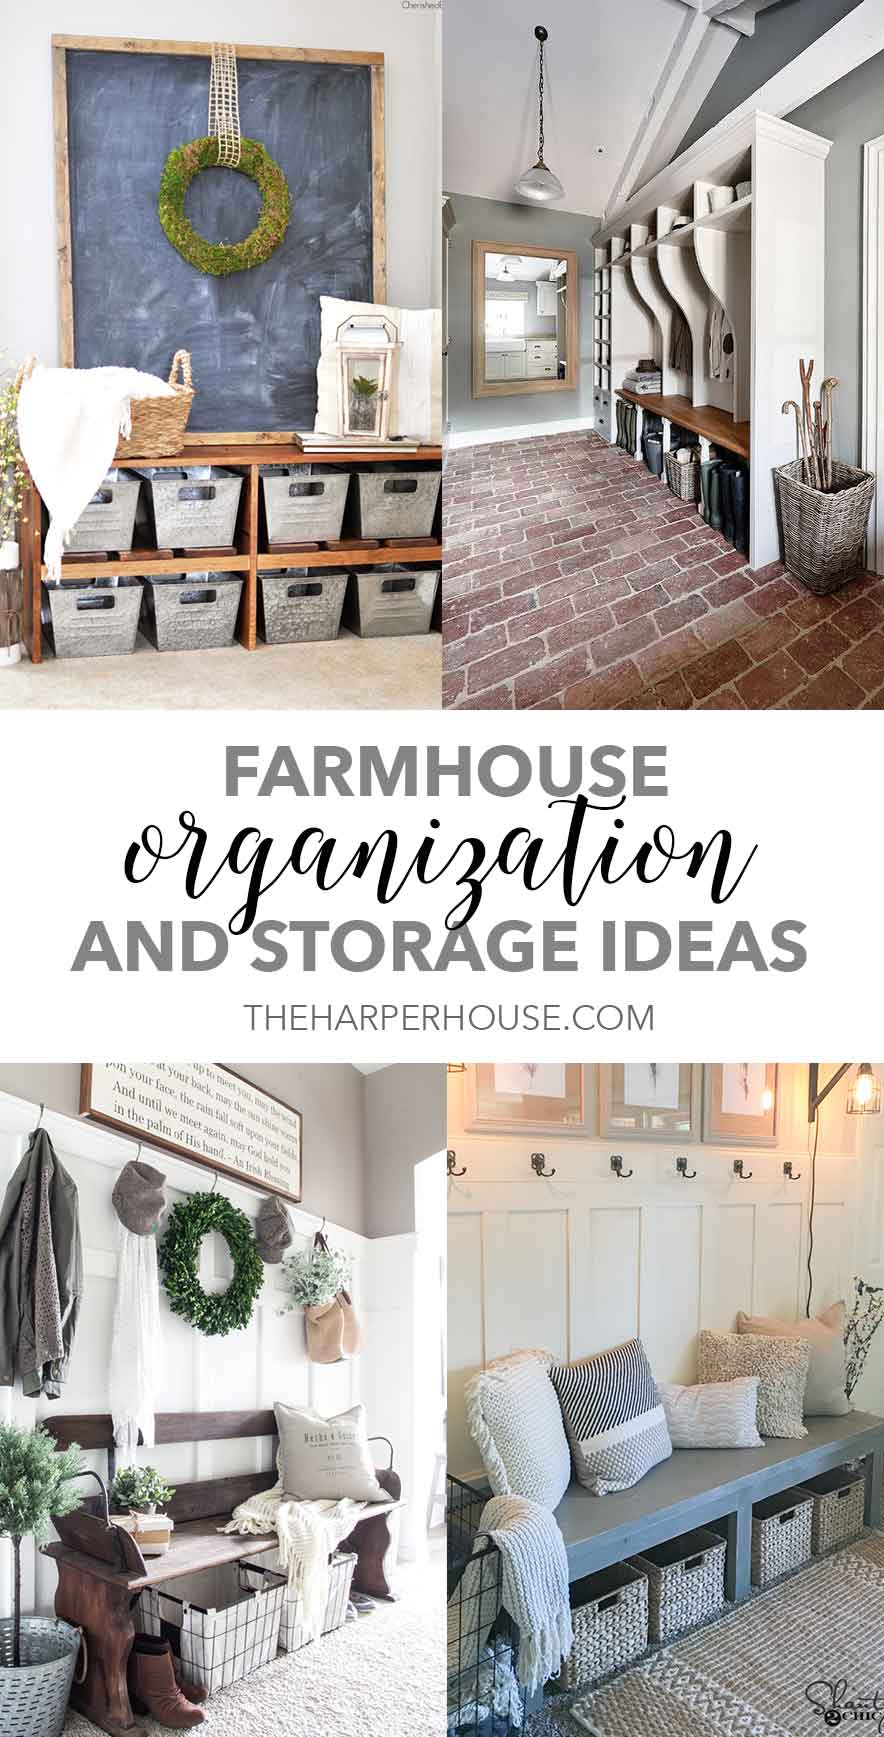 Farmhouse Organization and Storage Ideas